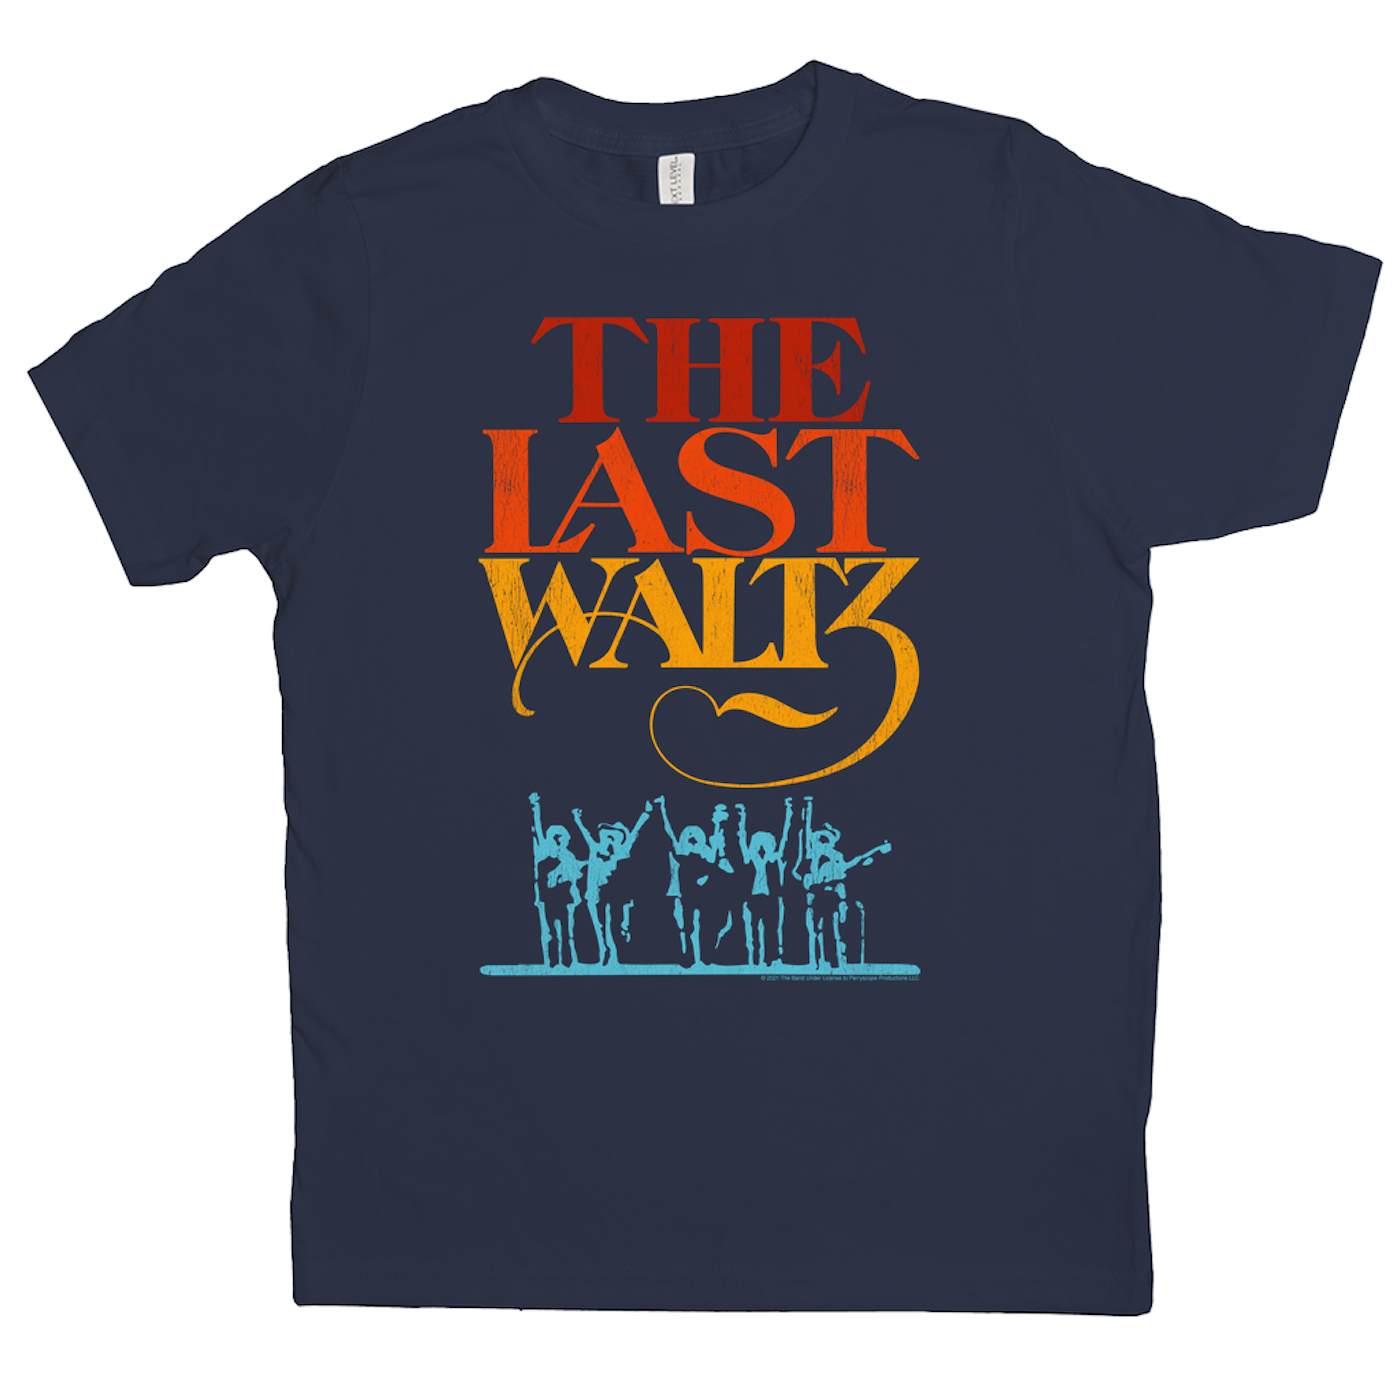 The Band Kids T-Shirt | The Last Waltz Movie Logo The Band Kids Shirt (Merchbar Exclusive)